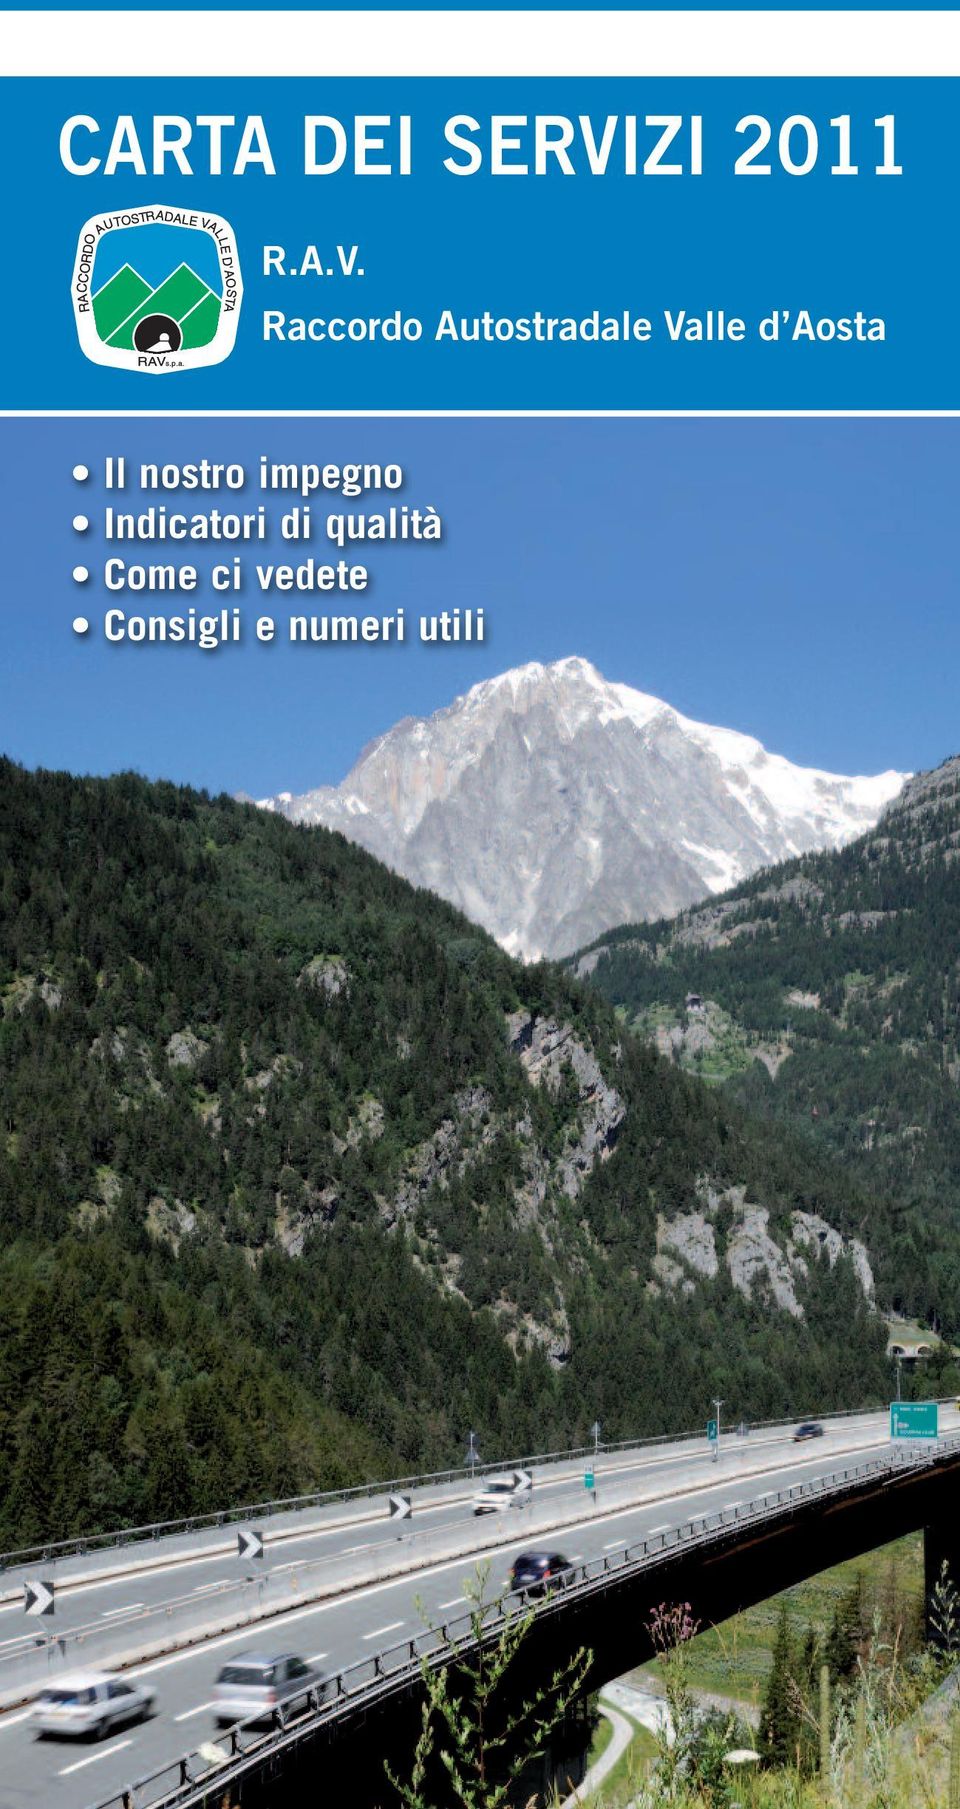 Raccordo Autostradale Valle d Aosta